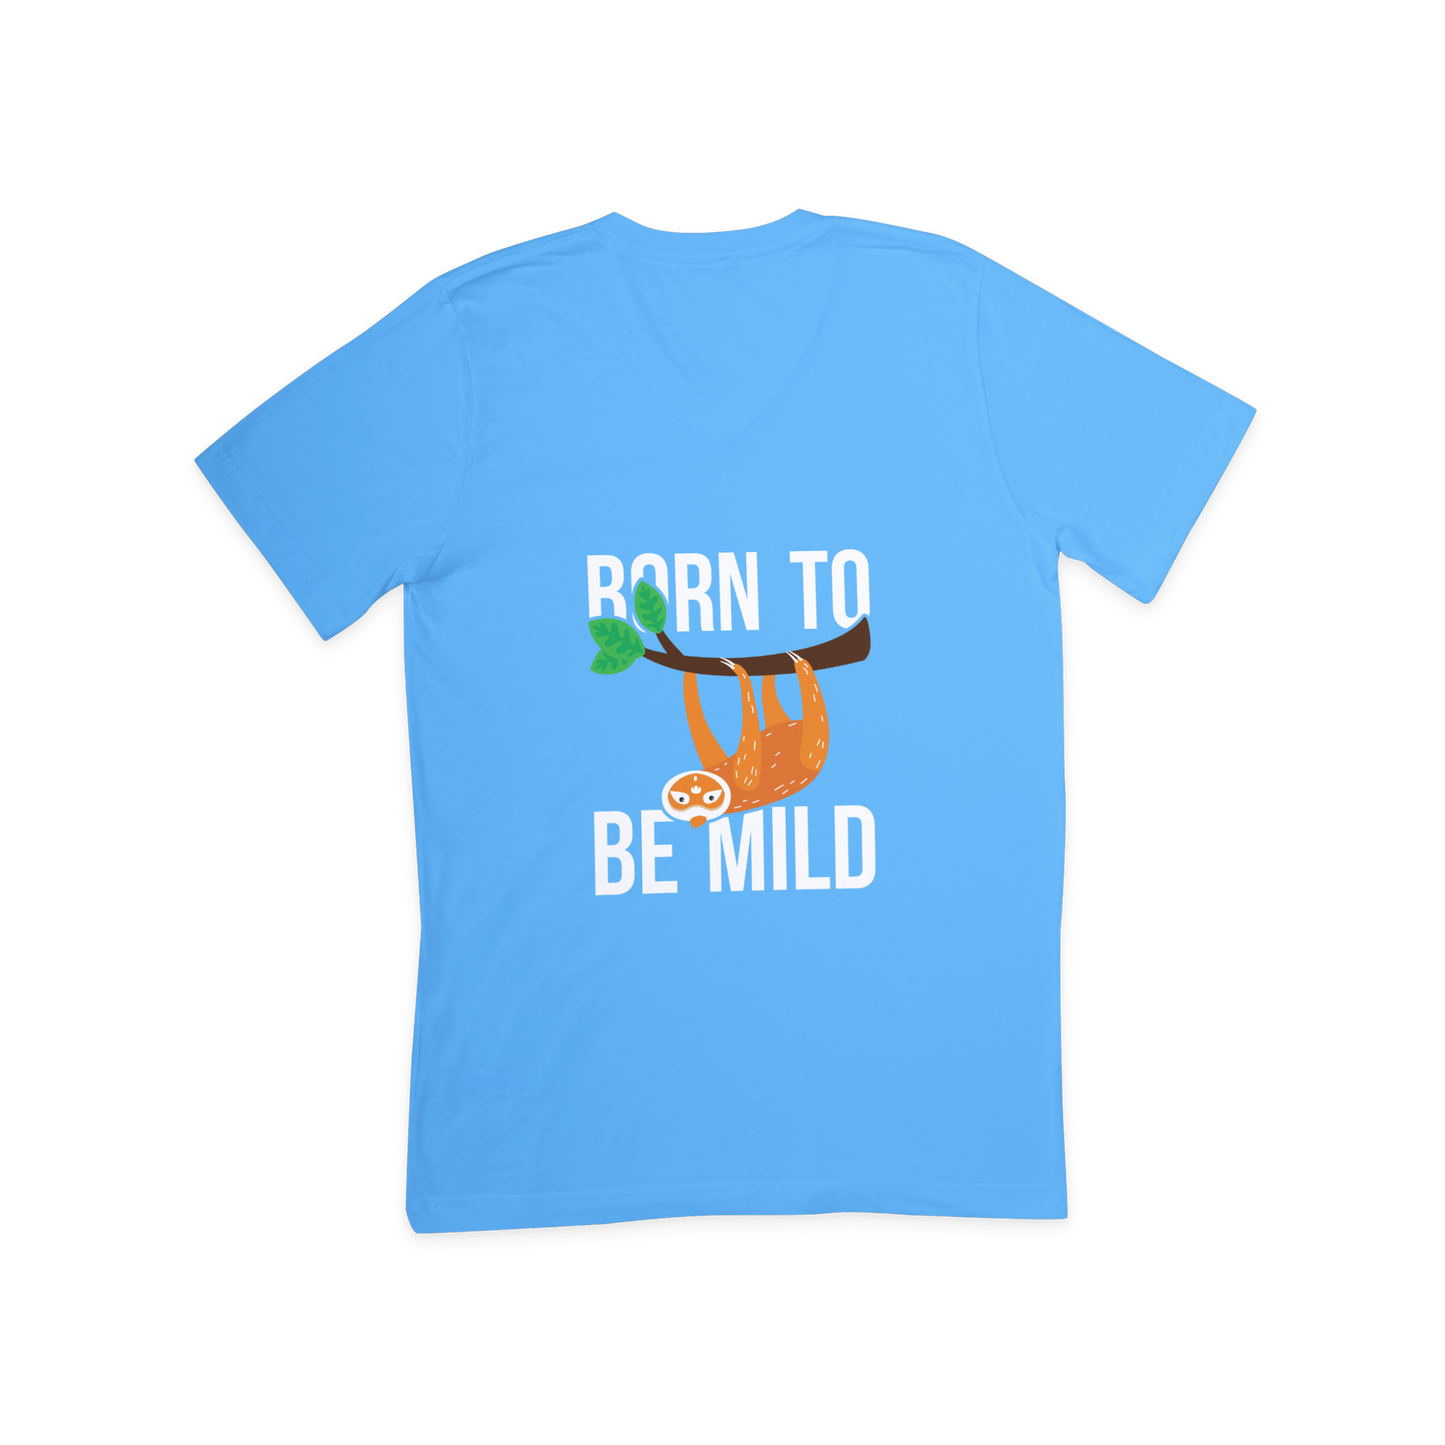 Born to be mild design T shirt